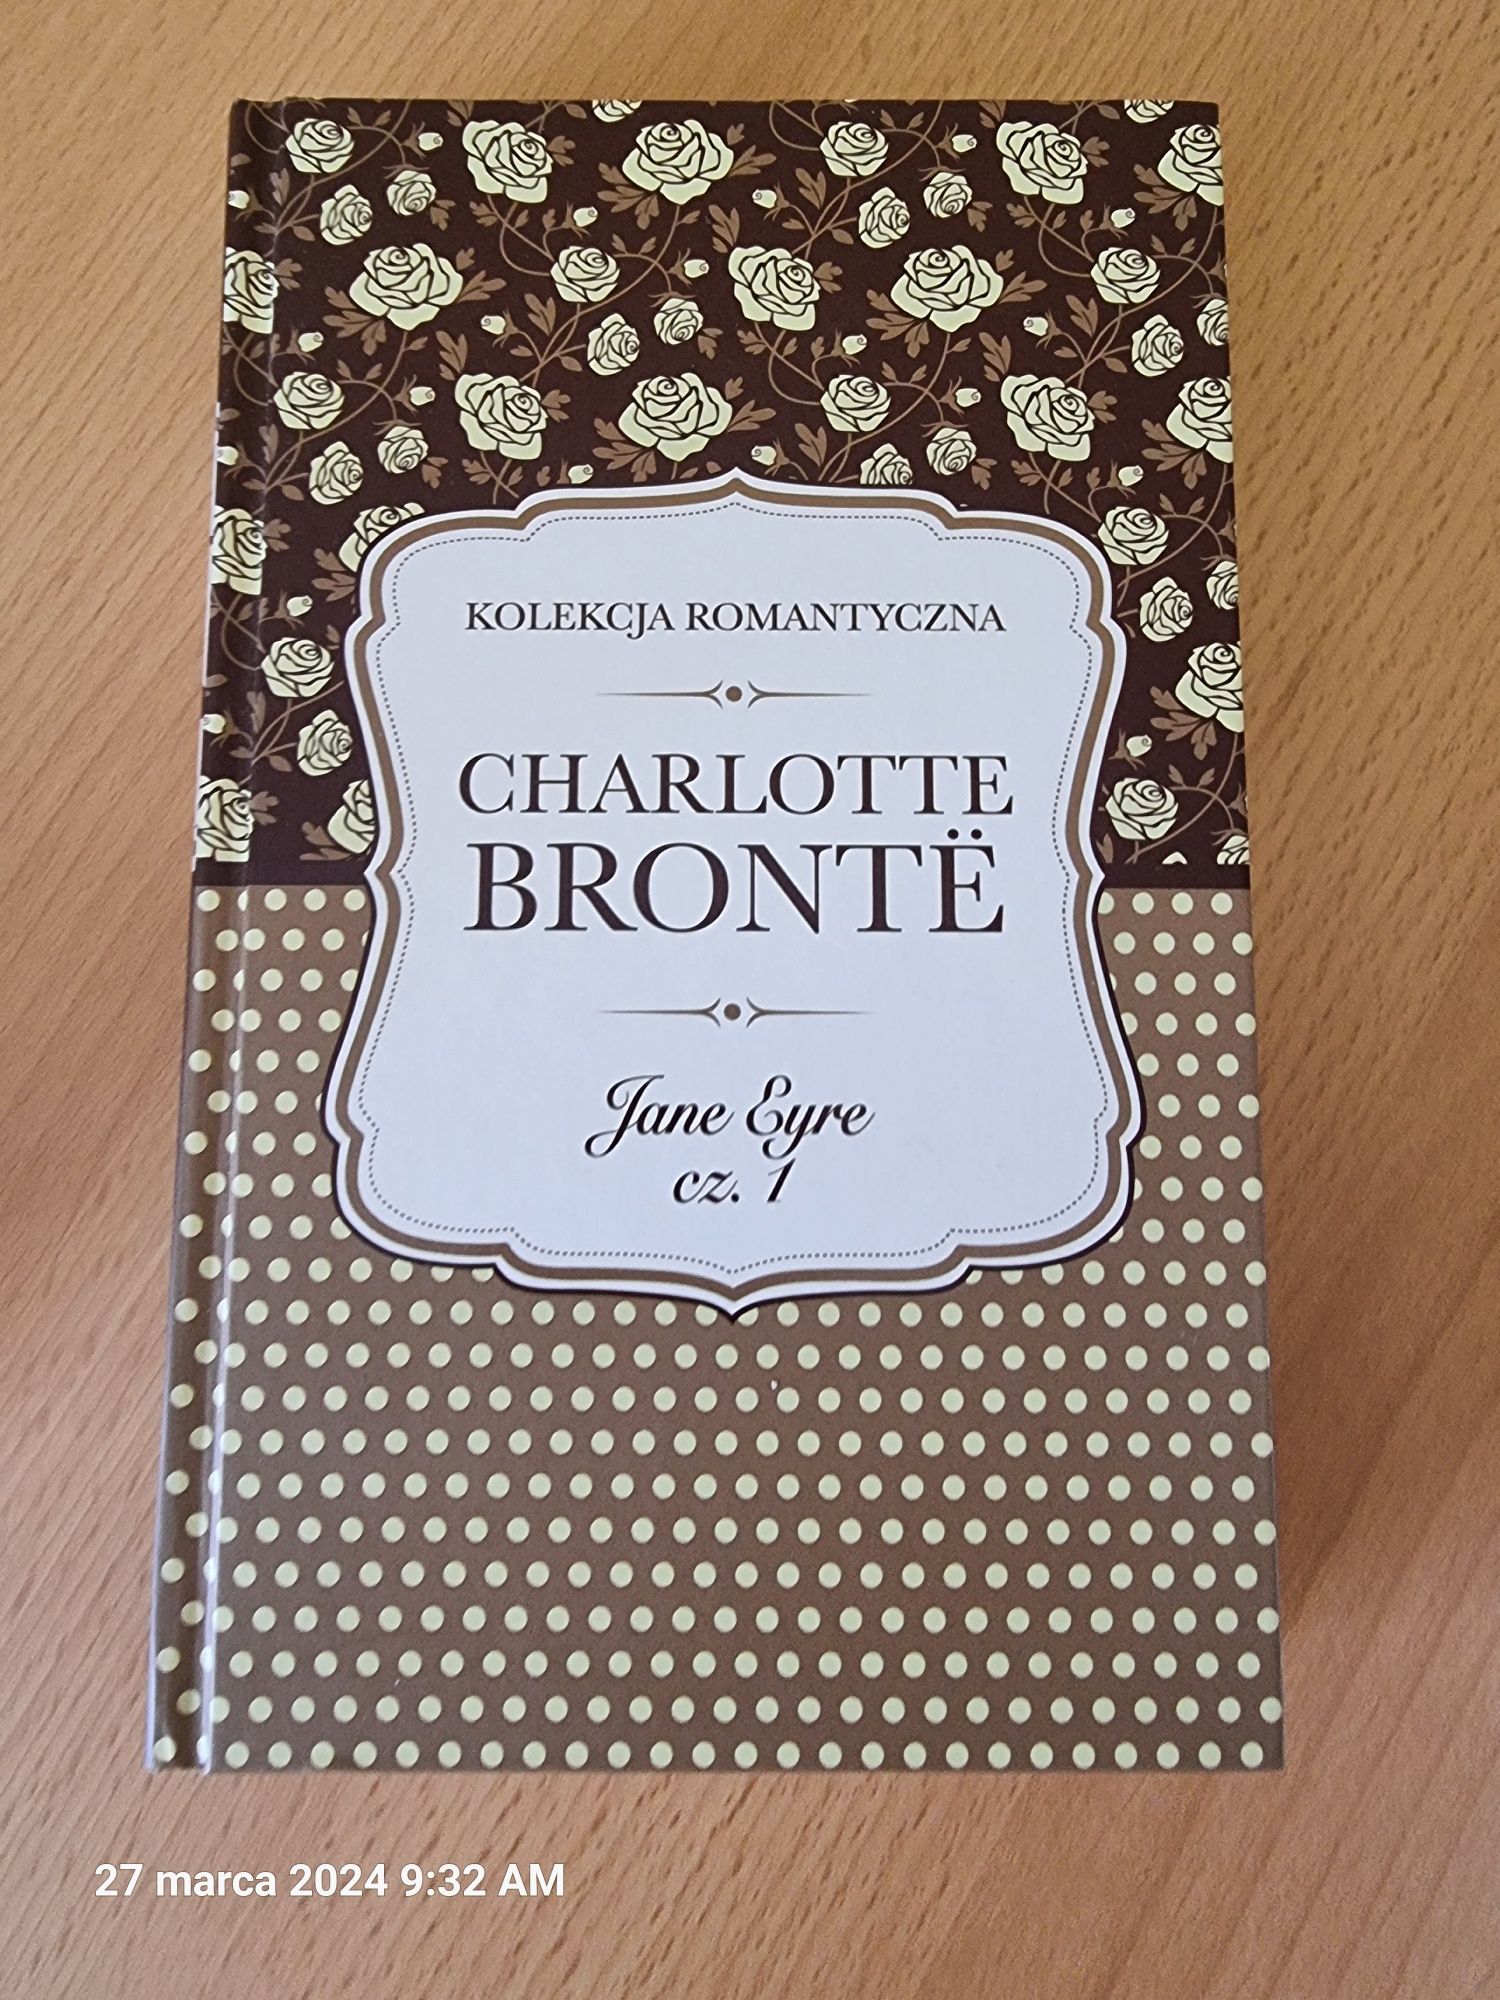 Charlotte Bronte "Jane Eyre " część 1,2